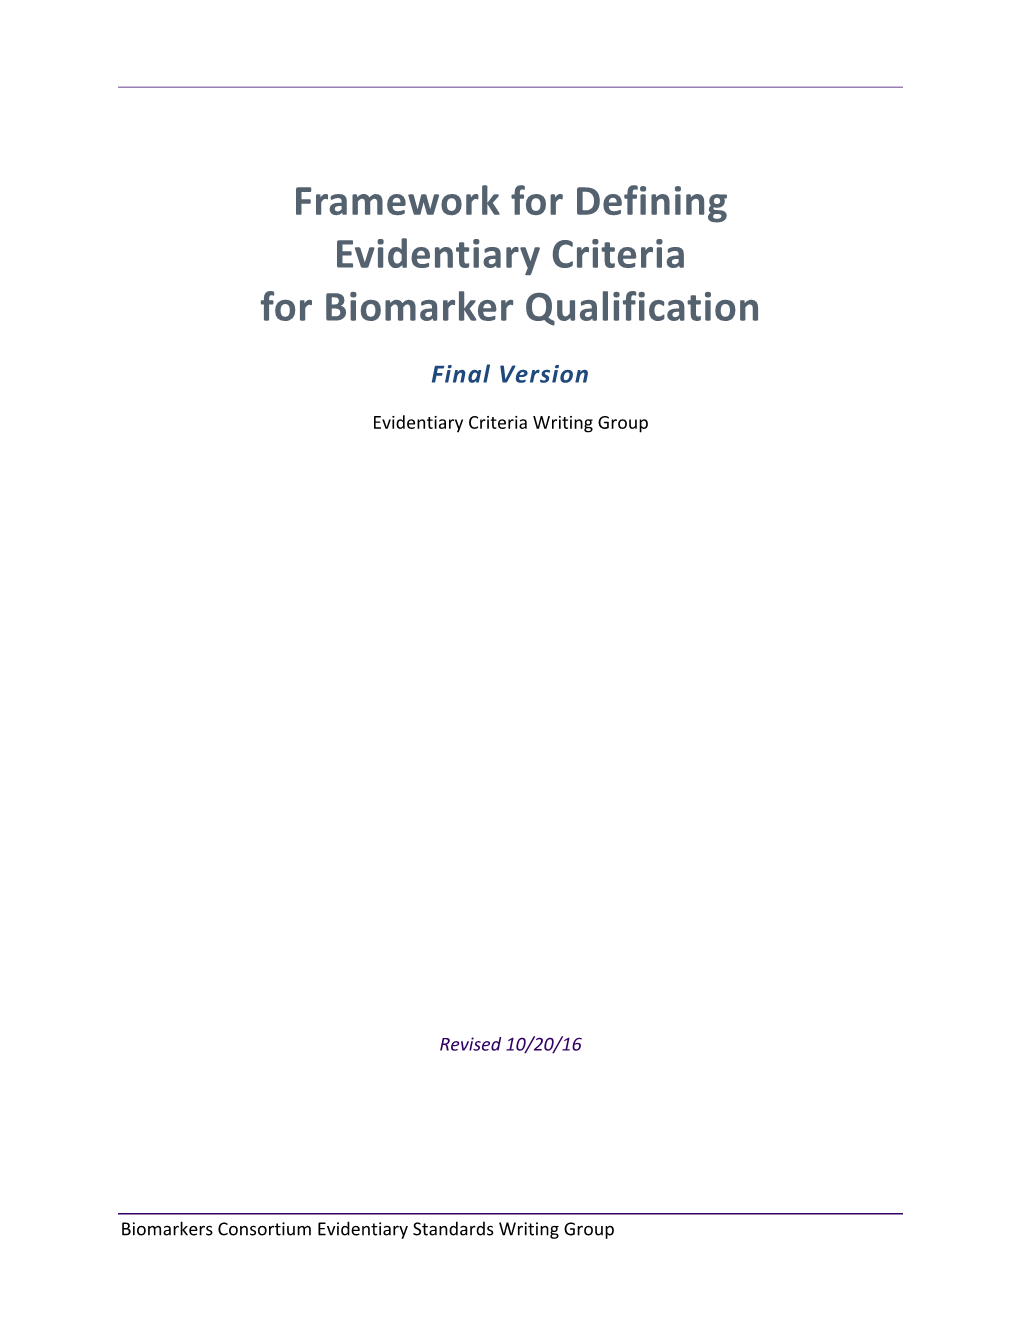 Framework for Defining Evidentiary Criteria for Biomarker Qualification: Final Version